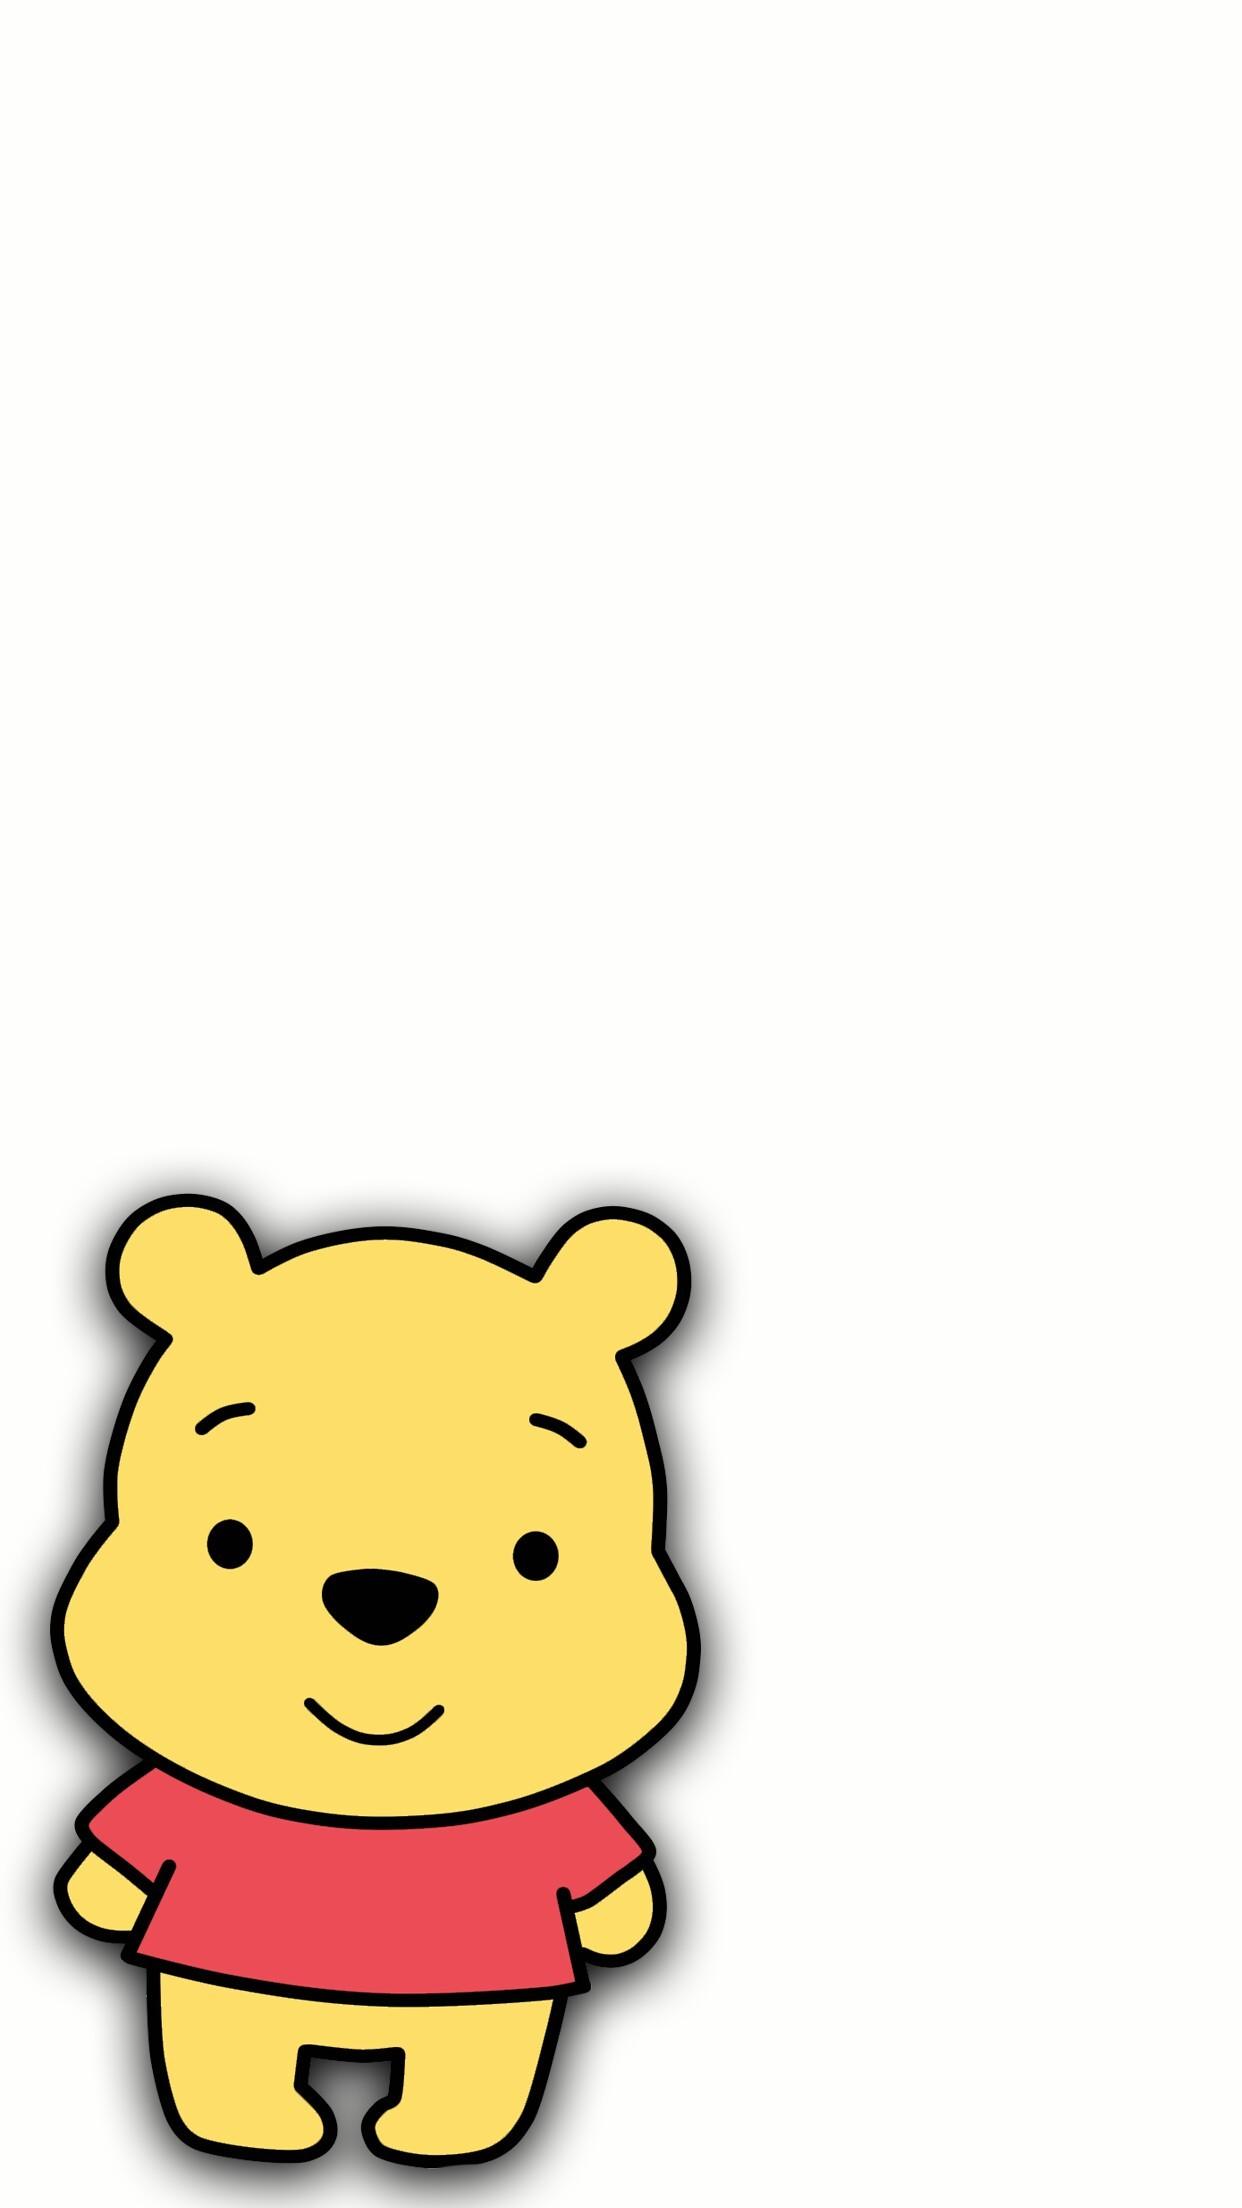 Best Winnie The Pooh iPhone Wallpaper